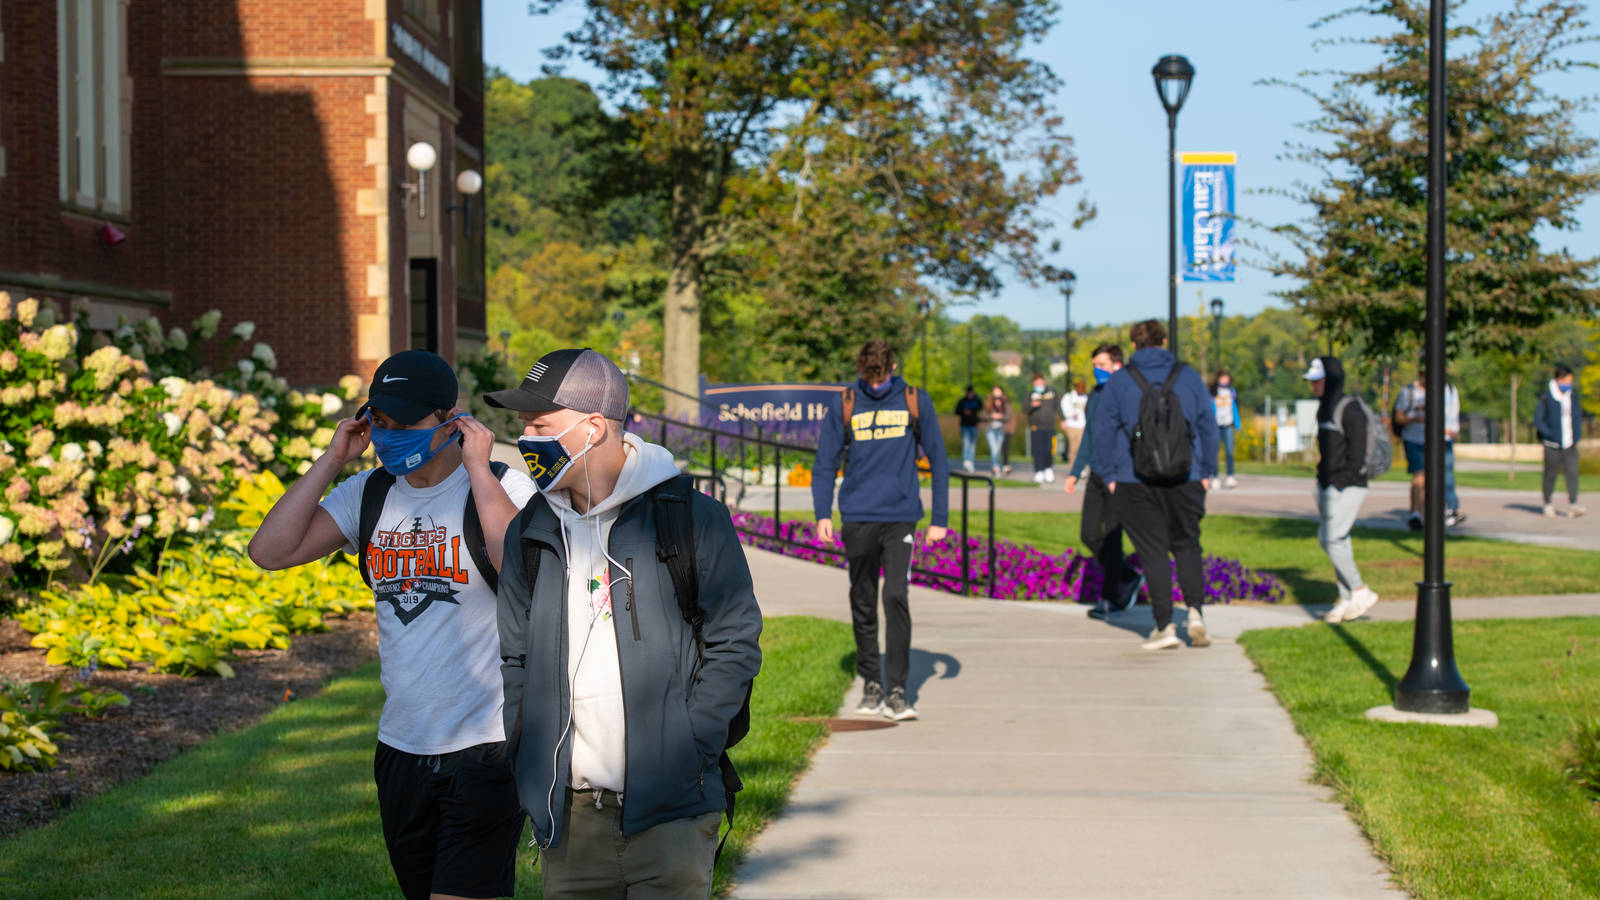 Students walking on sidewalk next to Schofield Hall, masks on, sunny day